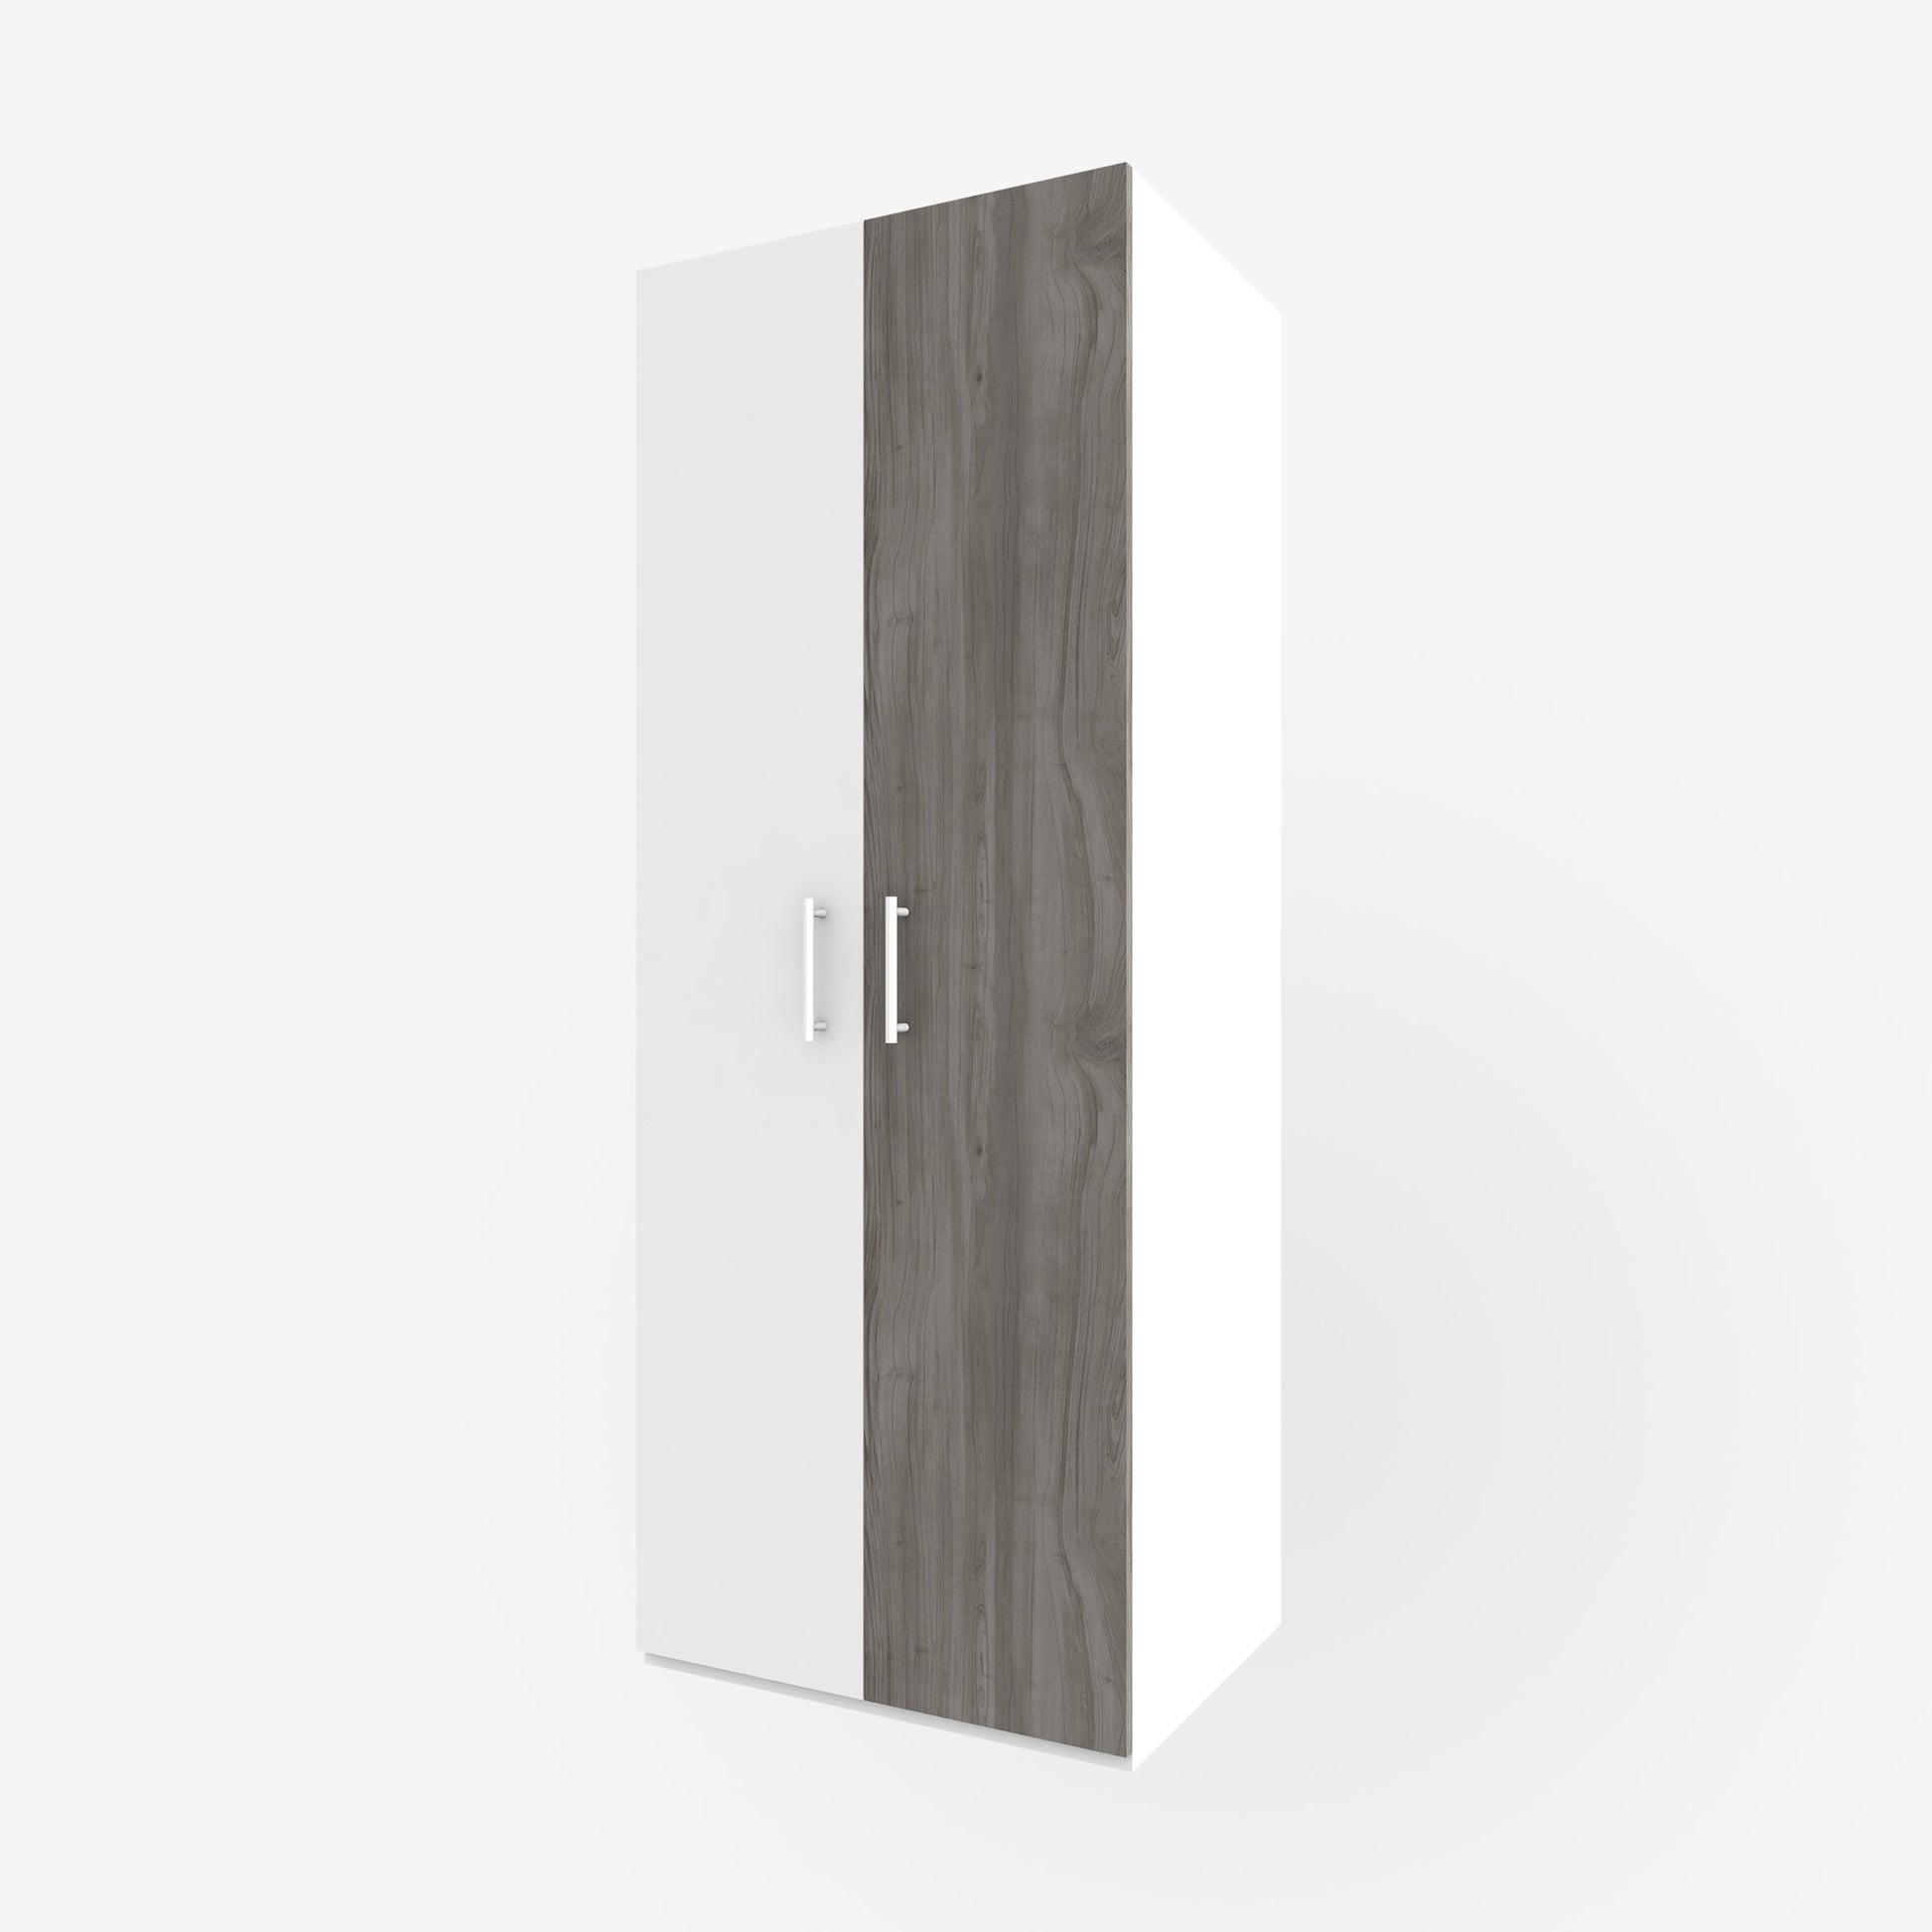 15" x 79" warm wood tone echowood slab door for Ikea or Swedeboxx pax closet cabinet